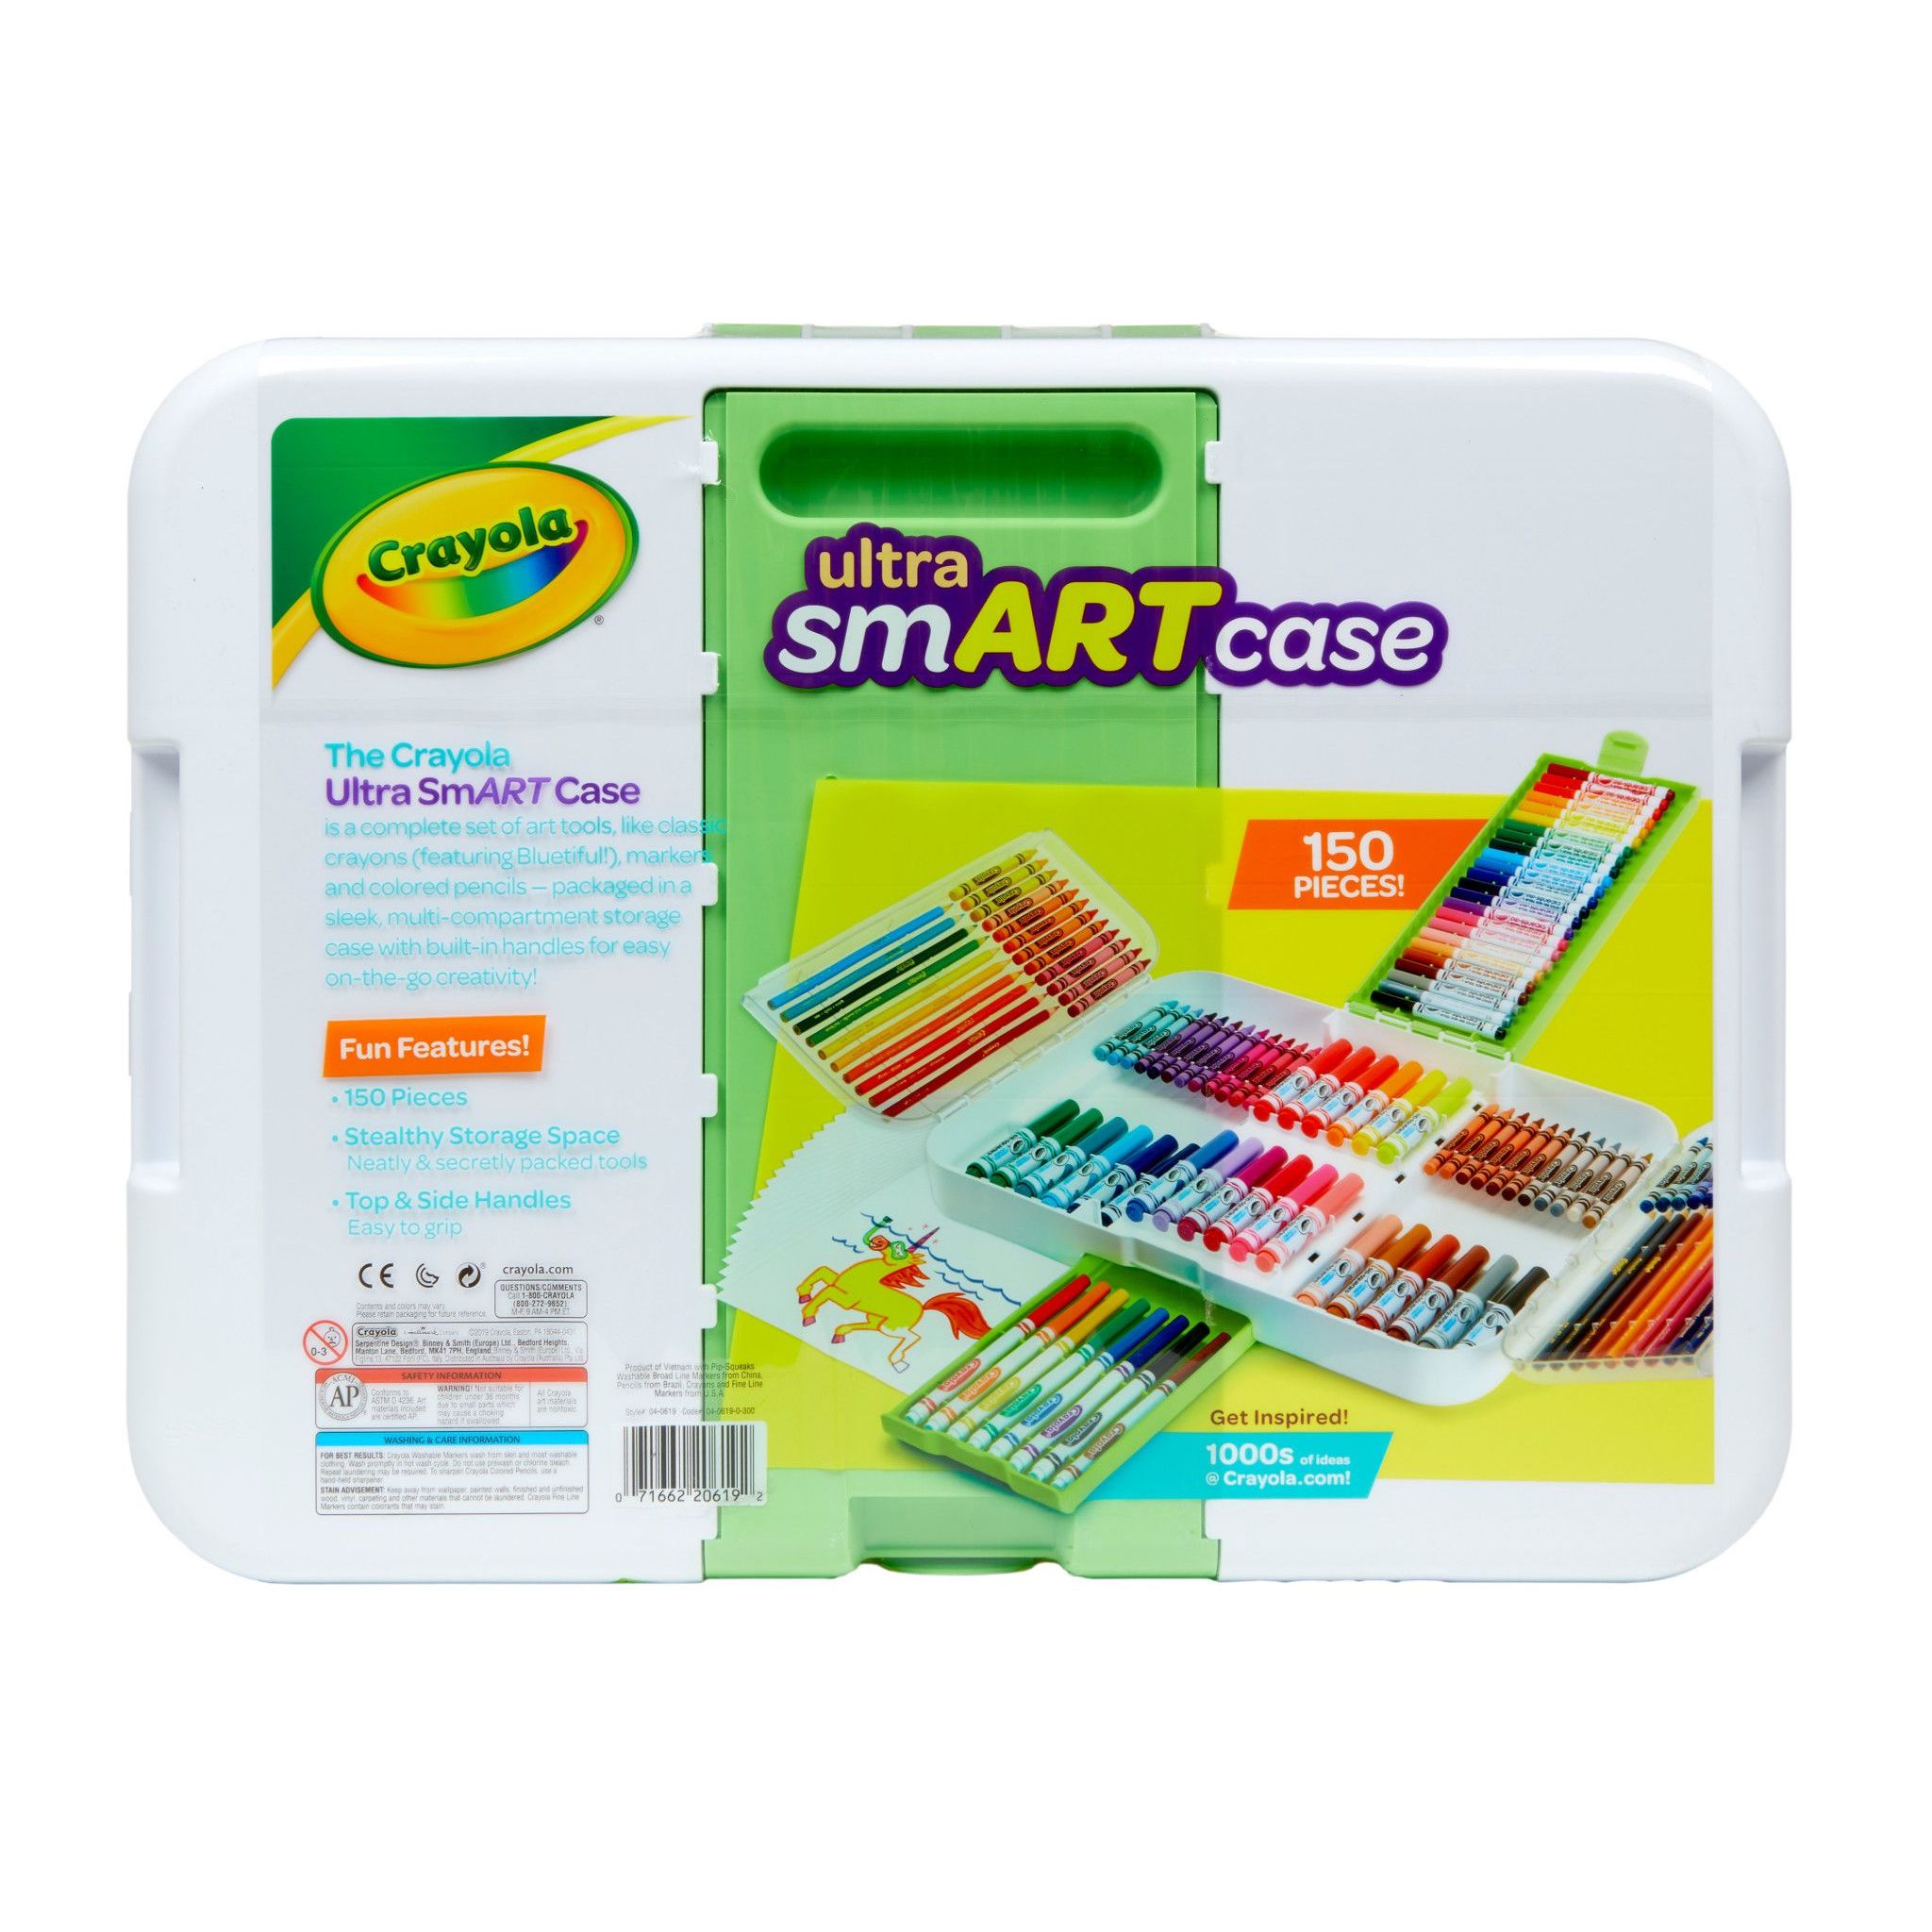 Crayola Ultra SmART Case, School Supplies, Markers & Crayons Art Set, Beginner Unisex Child - image 3 of 8